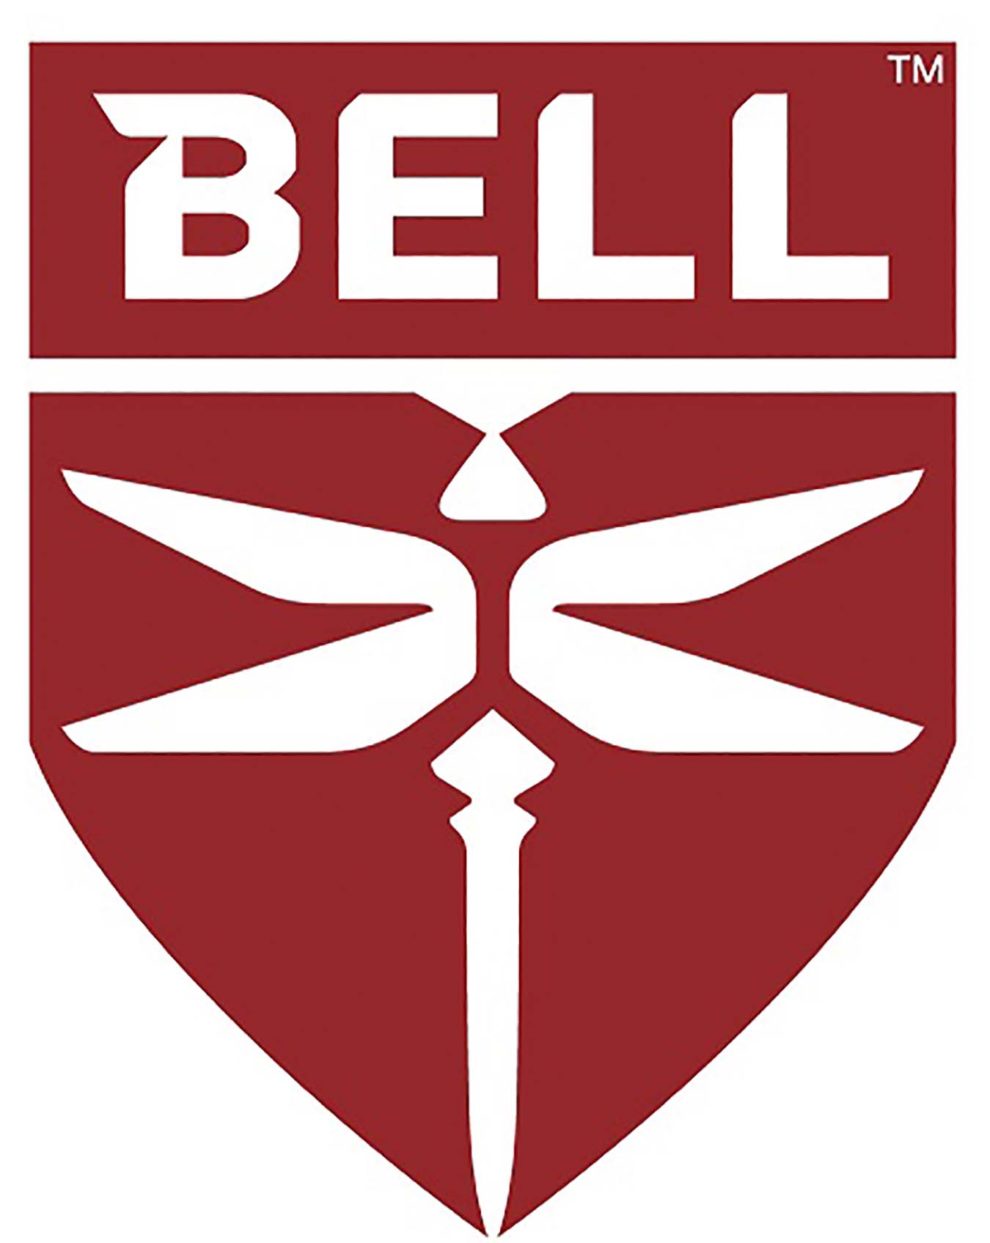 Bell-nuevo-logotipo-990x1243